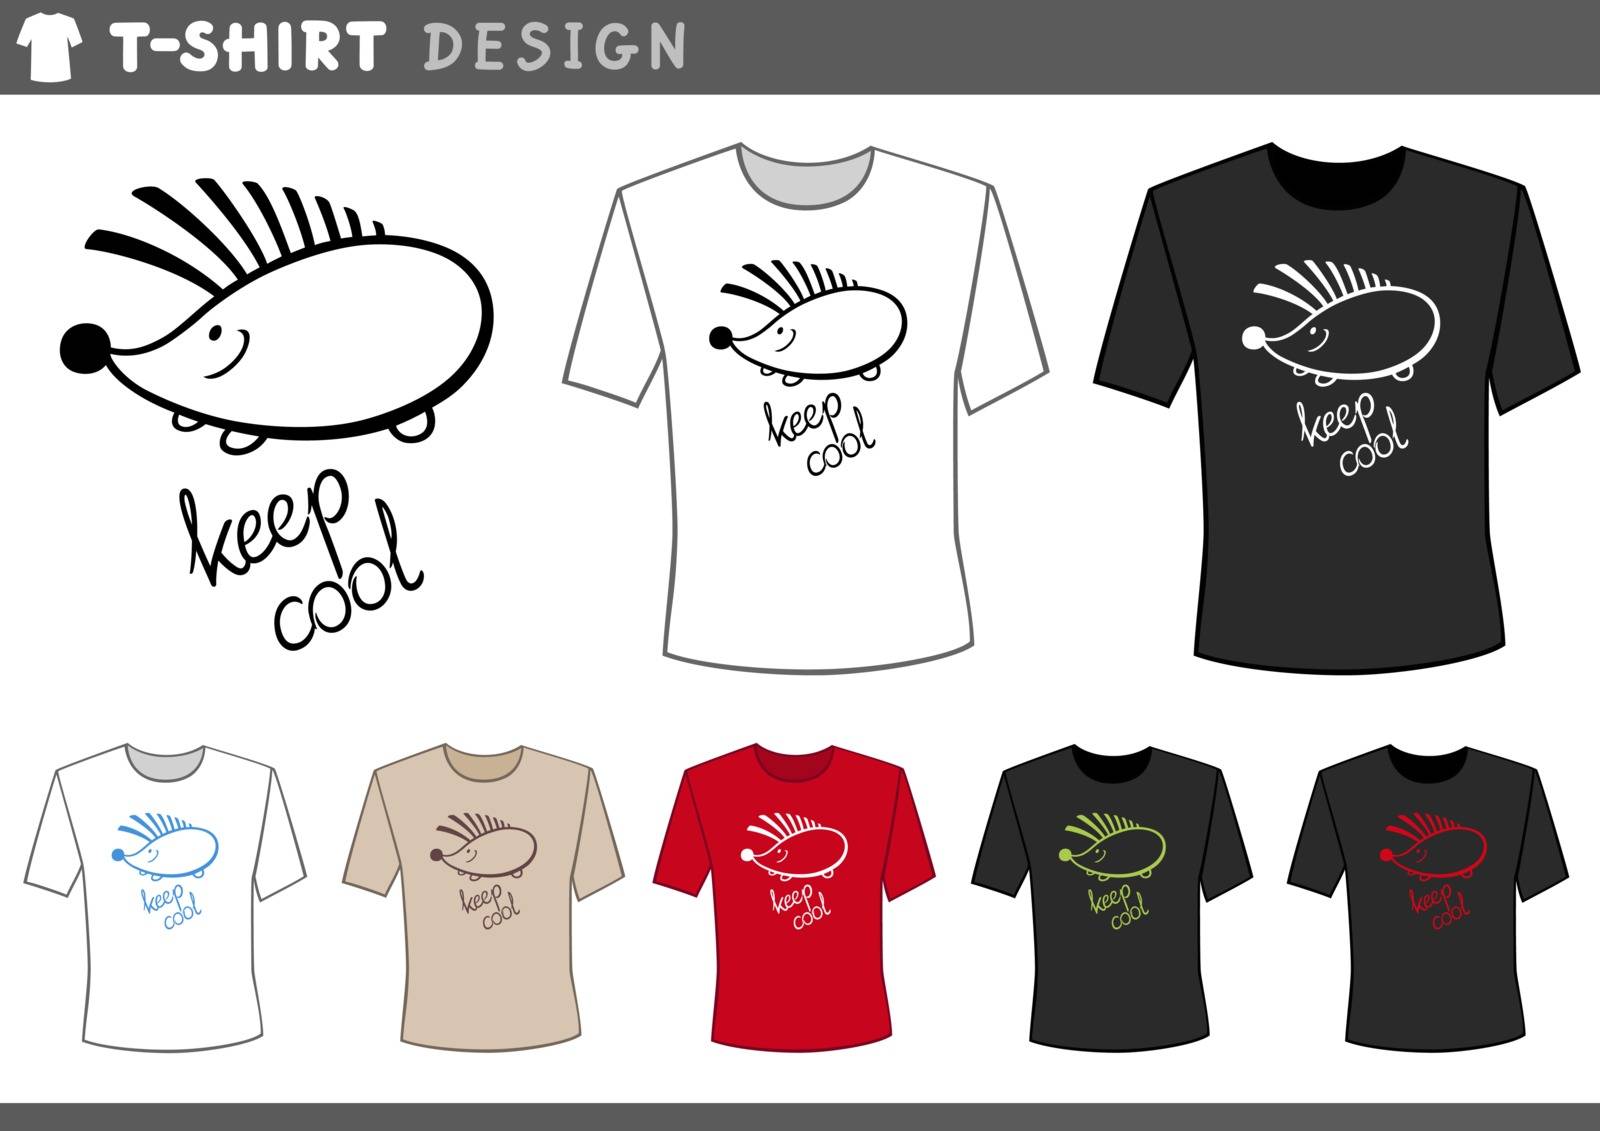 t shirt design with hedgehog by izakowski